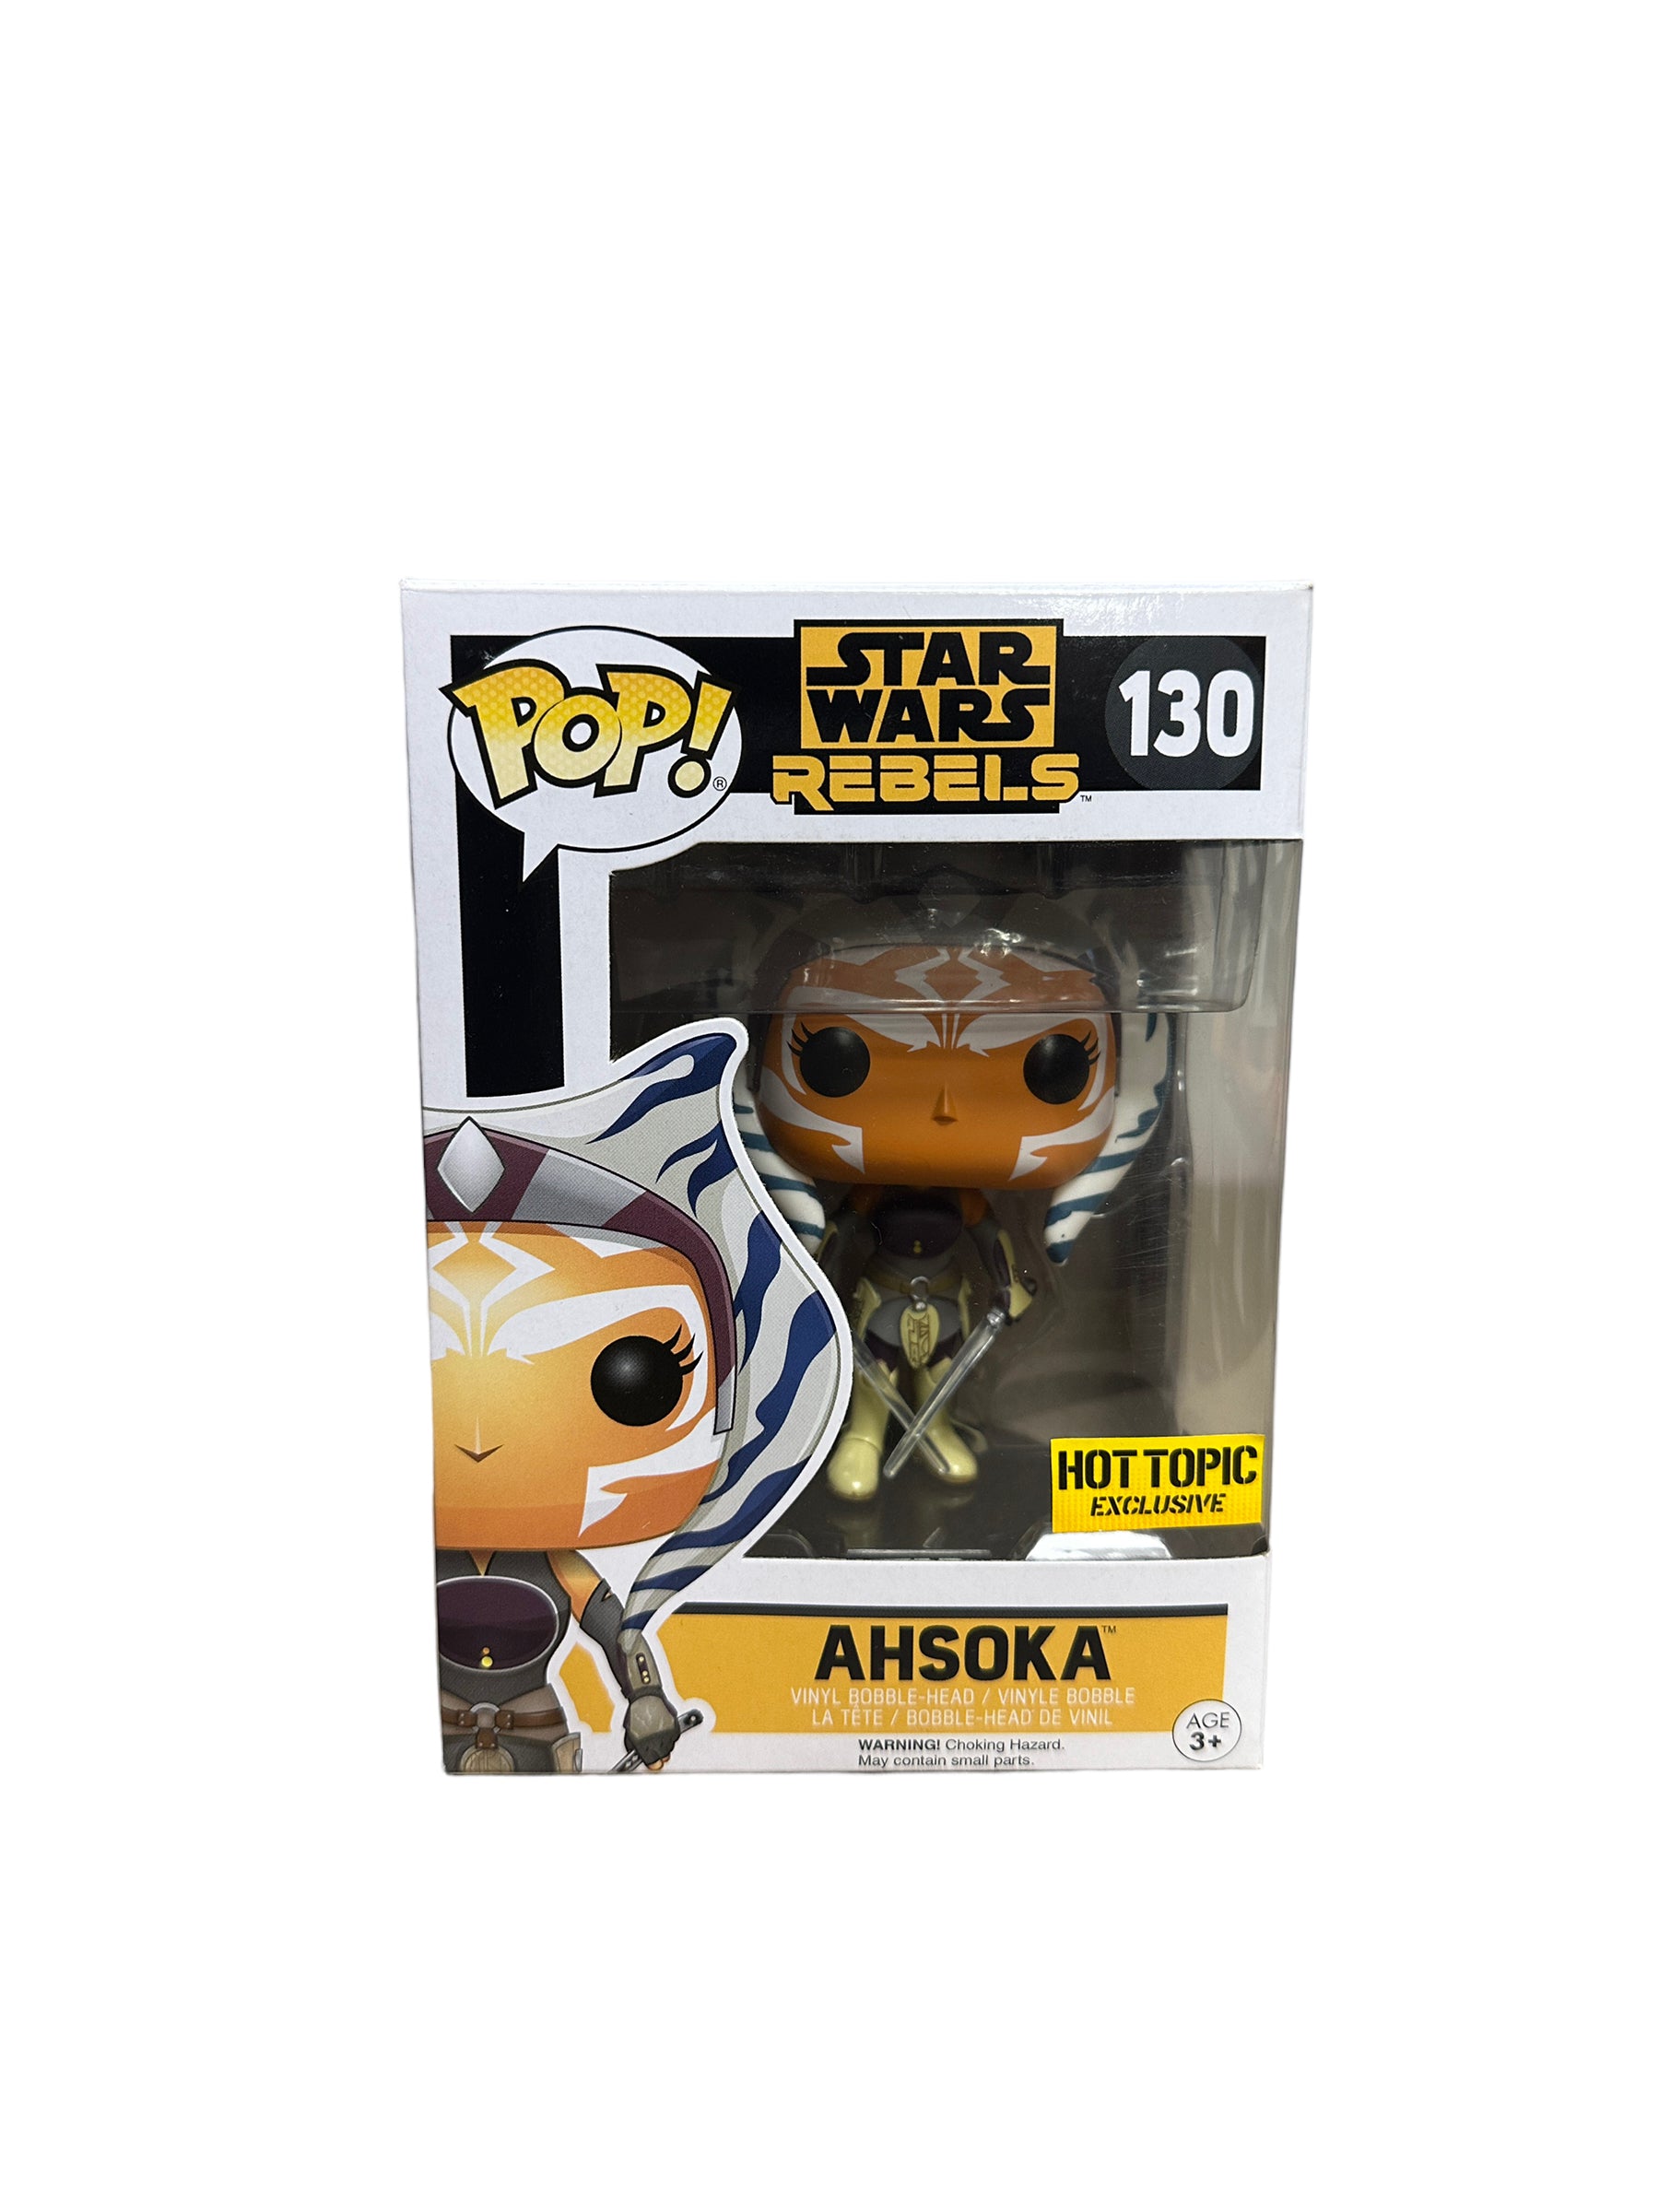 Ahsoka #130 Funko Pop! - Star Wars: Rebels - 2016 Pop! - Hot Topic Exclusive - Condition 8/10